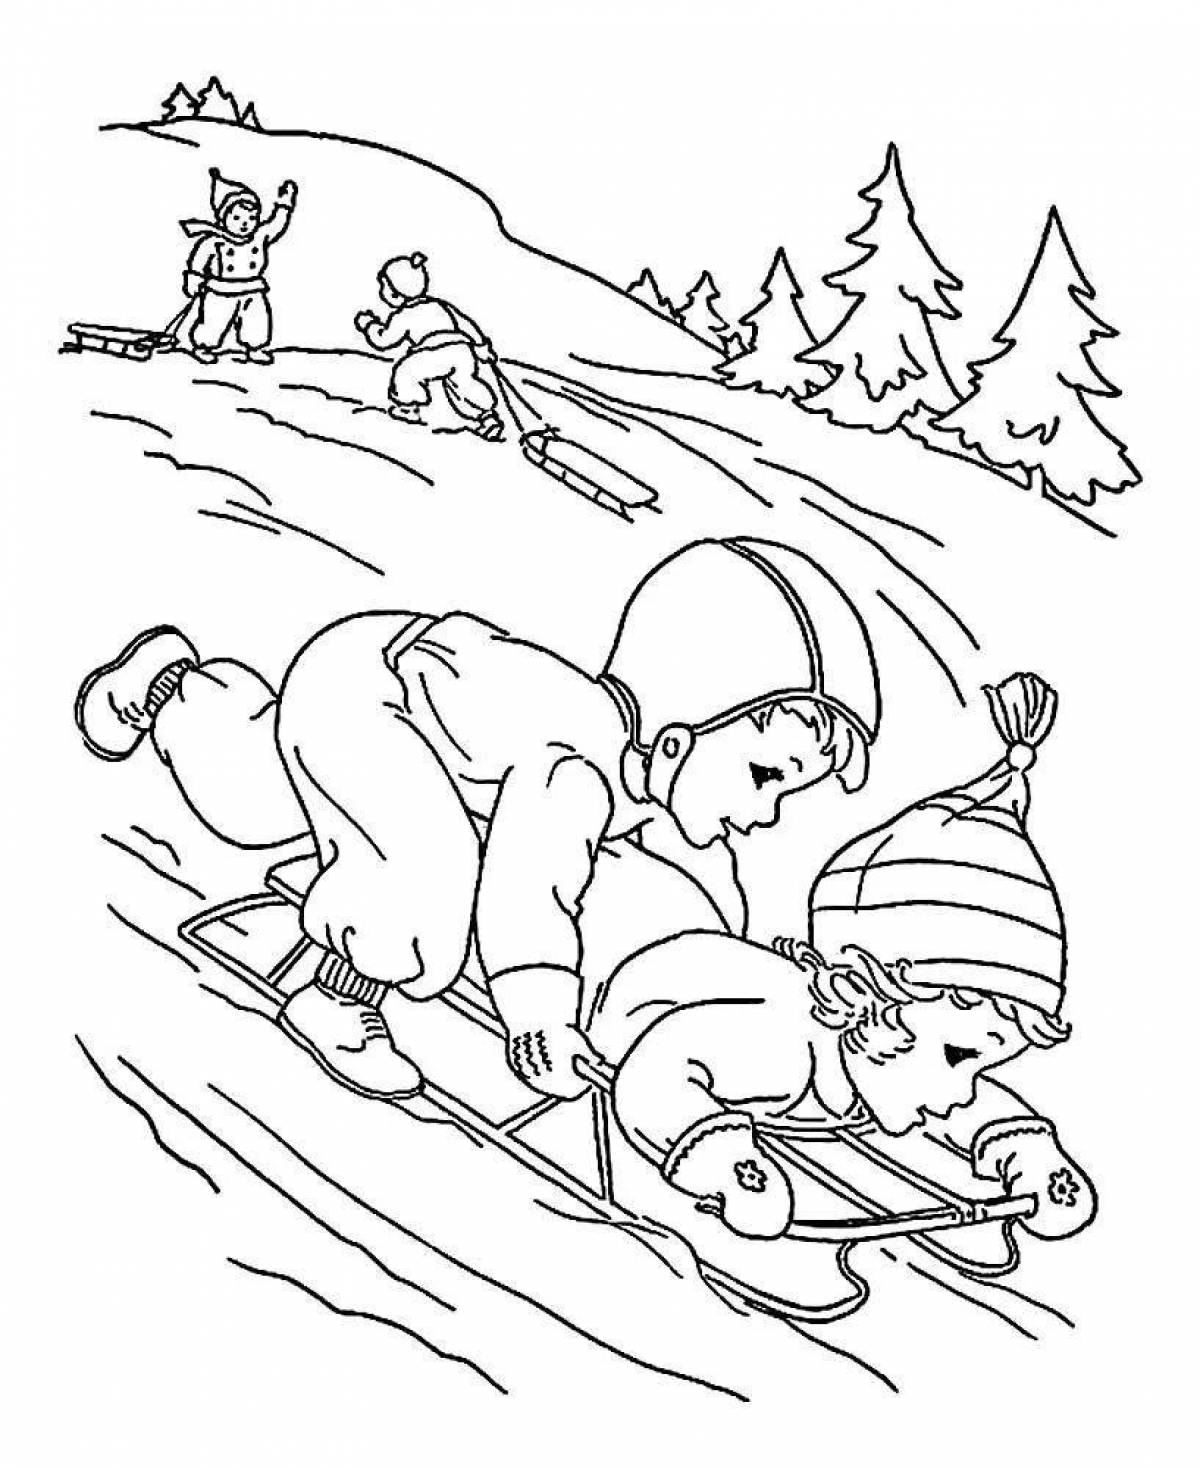 Children sledging #8